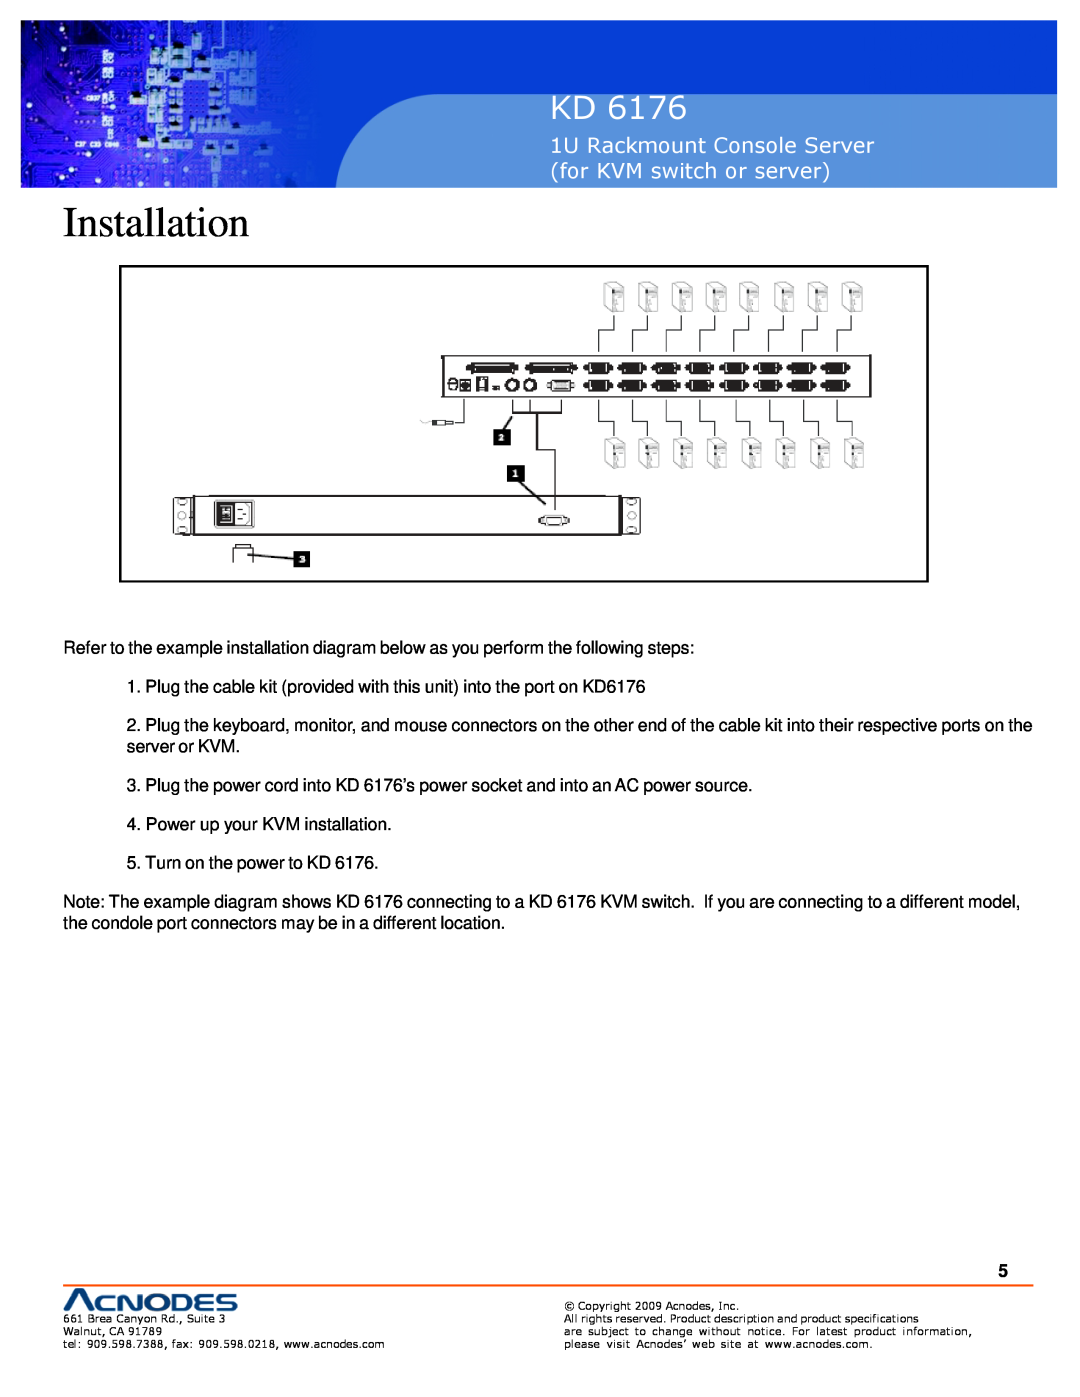 Acnodes KD 6176 user manual Installation, 1U Rackmount Console Server for KVM switch or server 